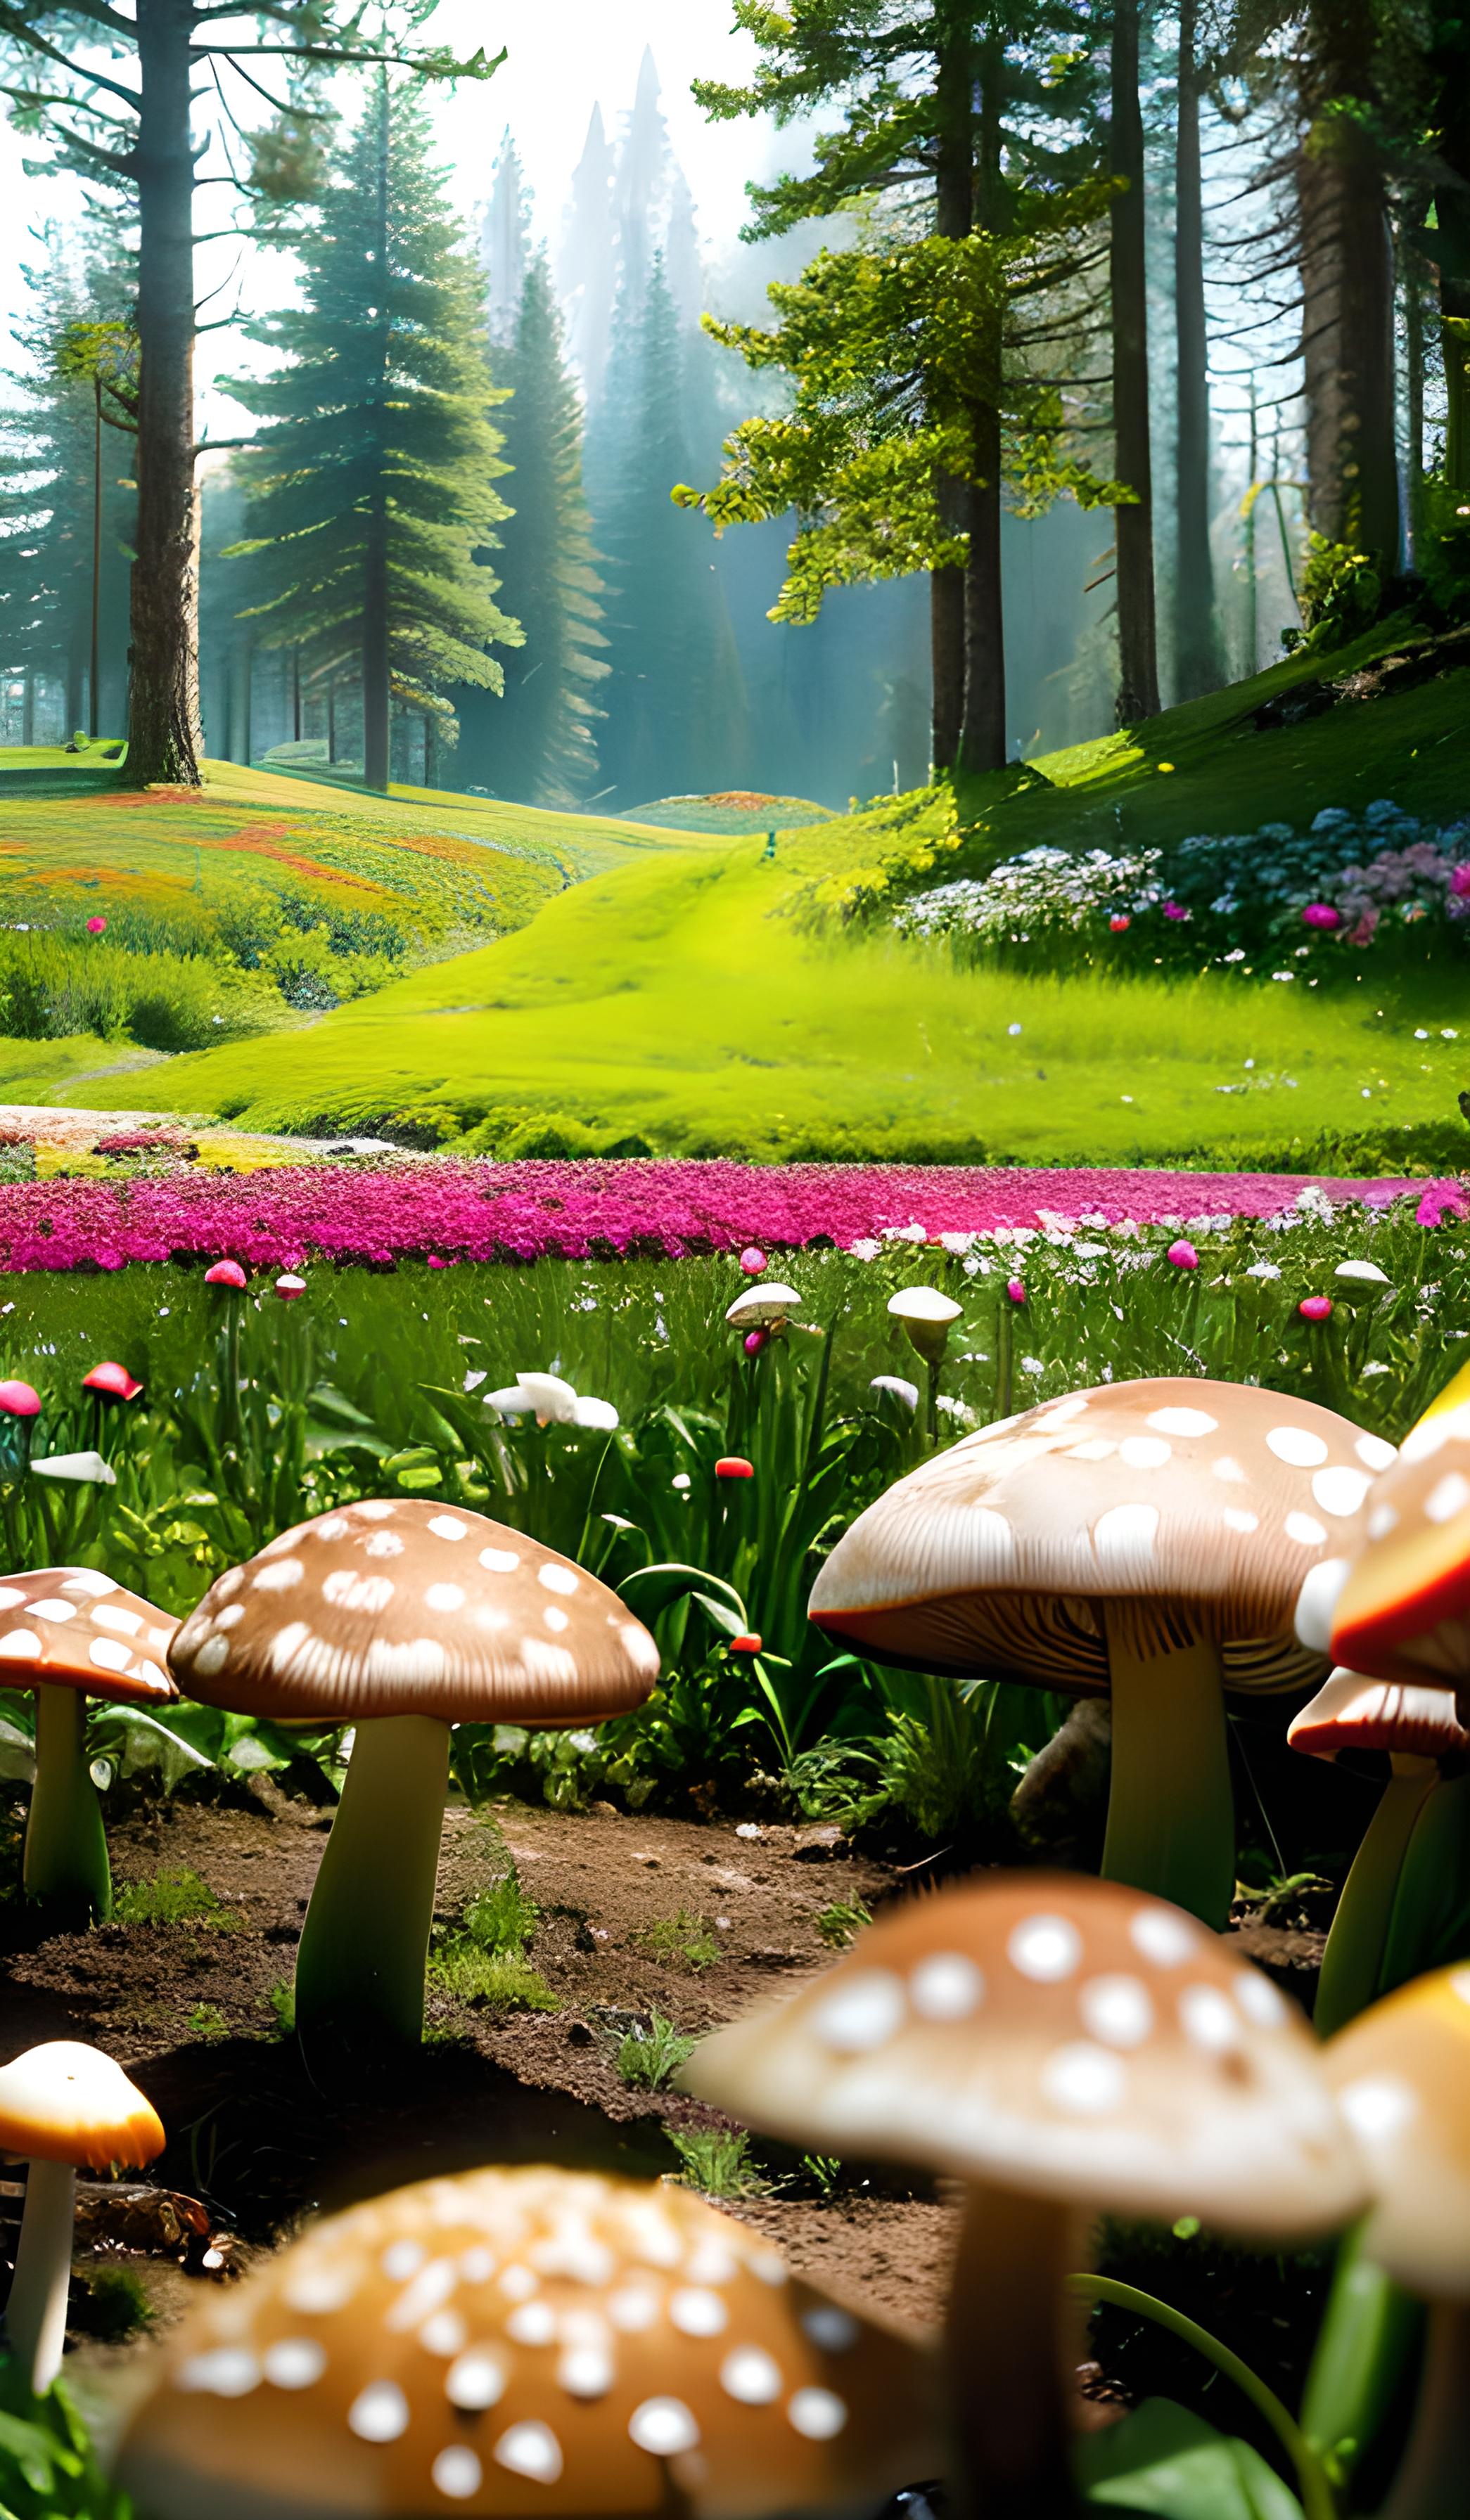 蘑菇林